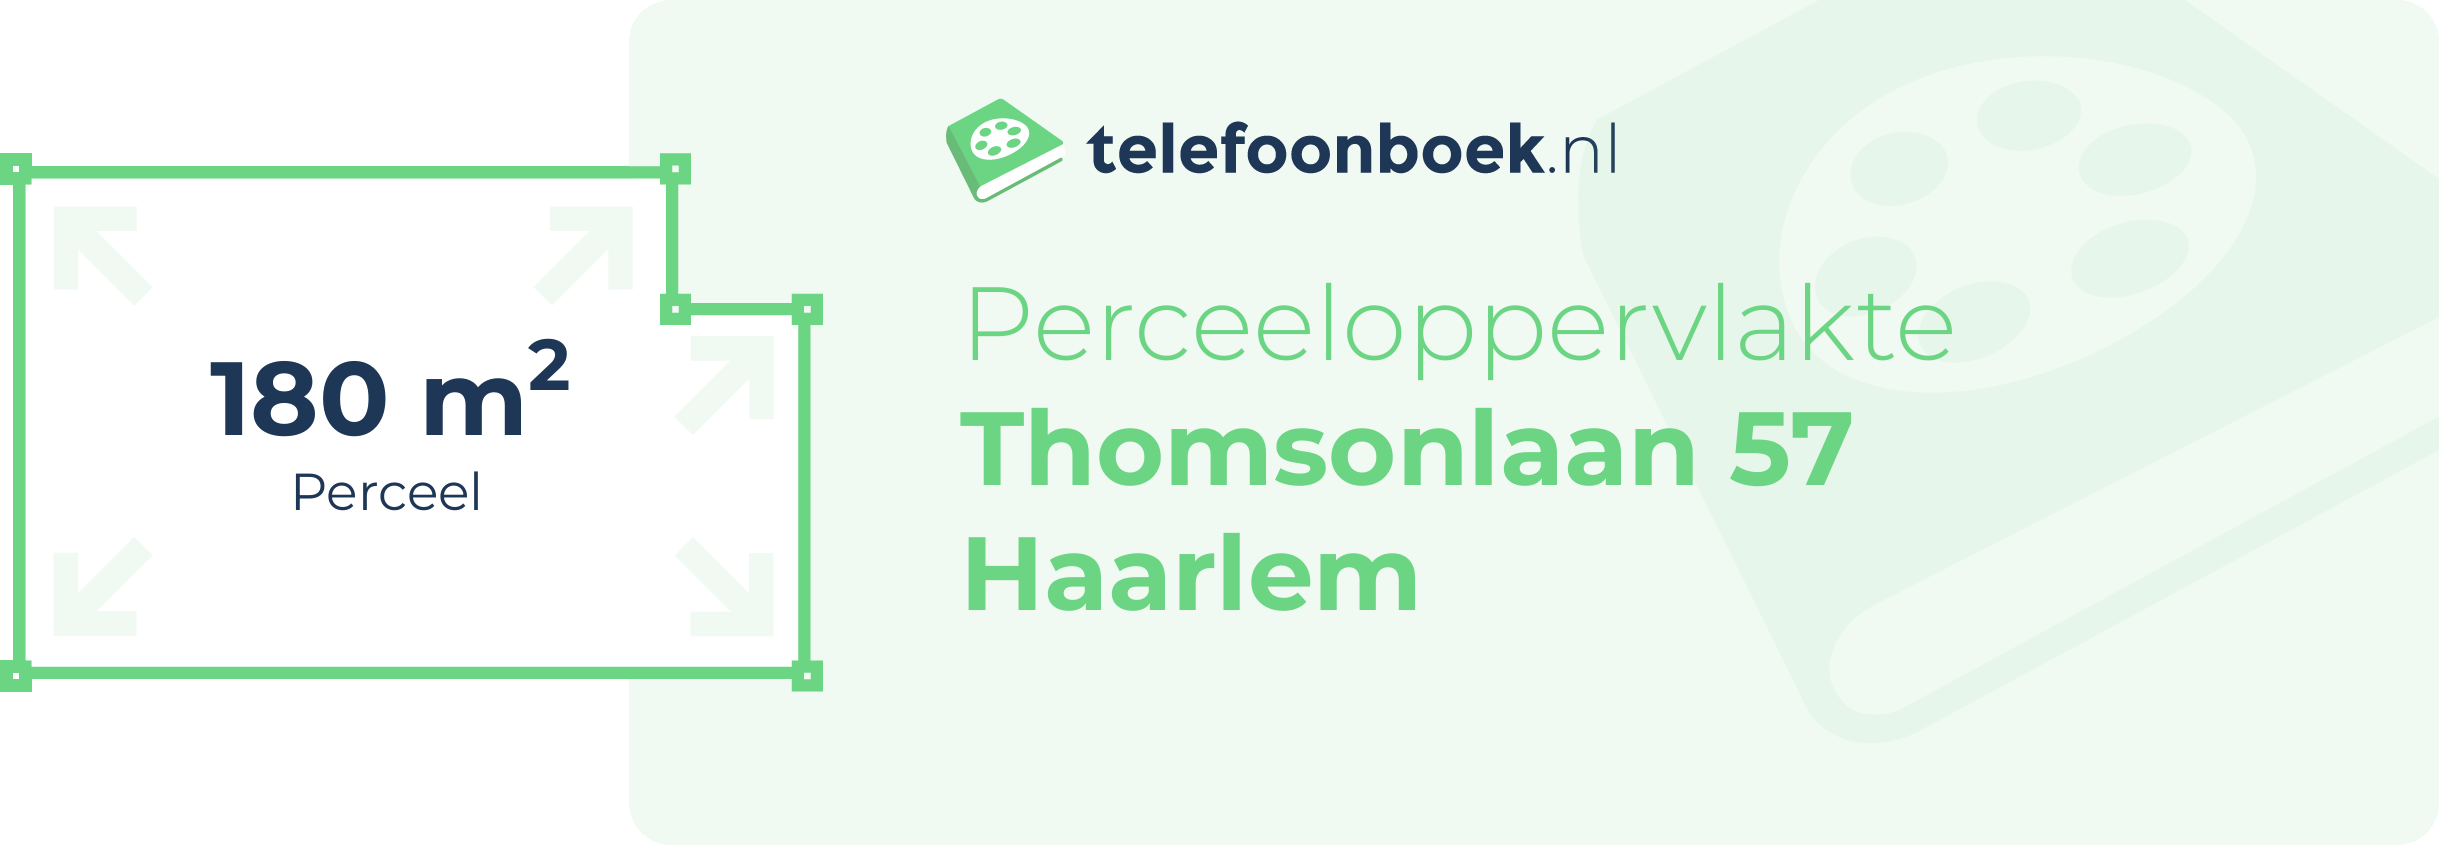 Perceeloppervlakte Thomsonlaan 57 Haarlem